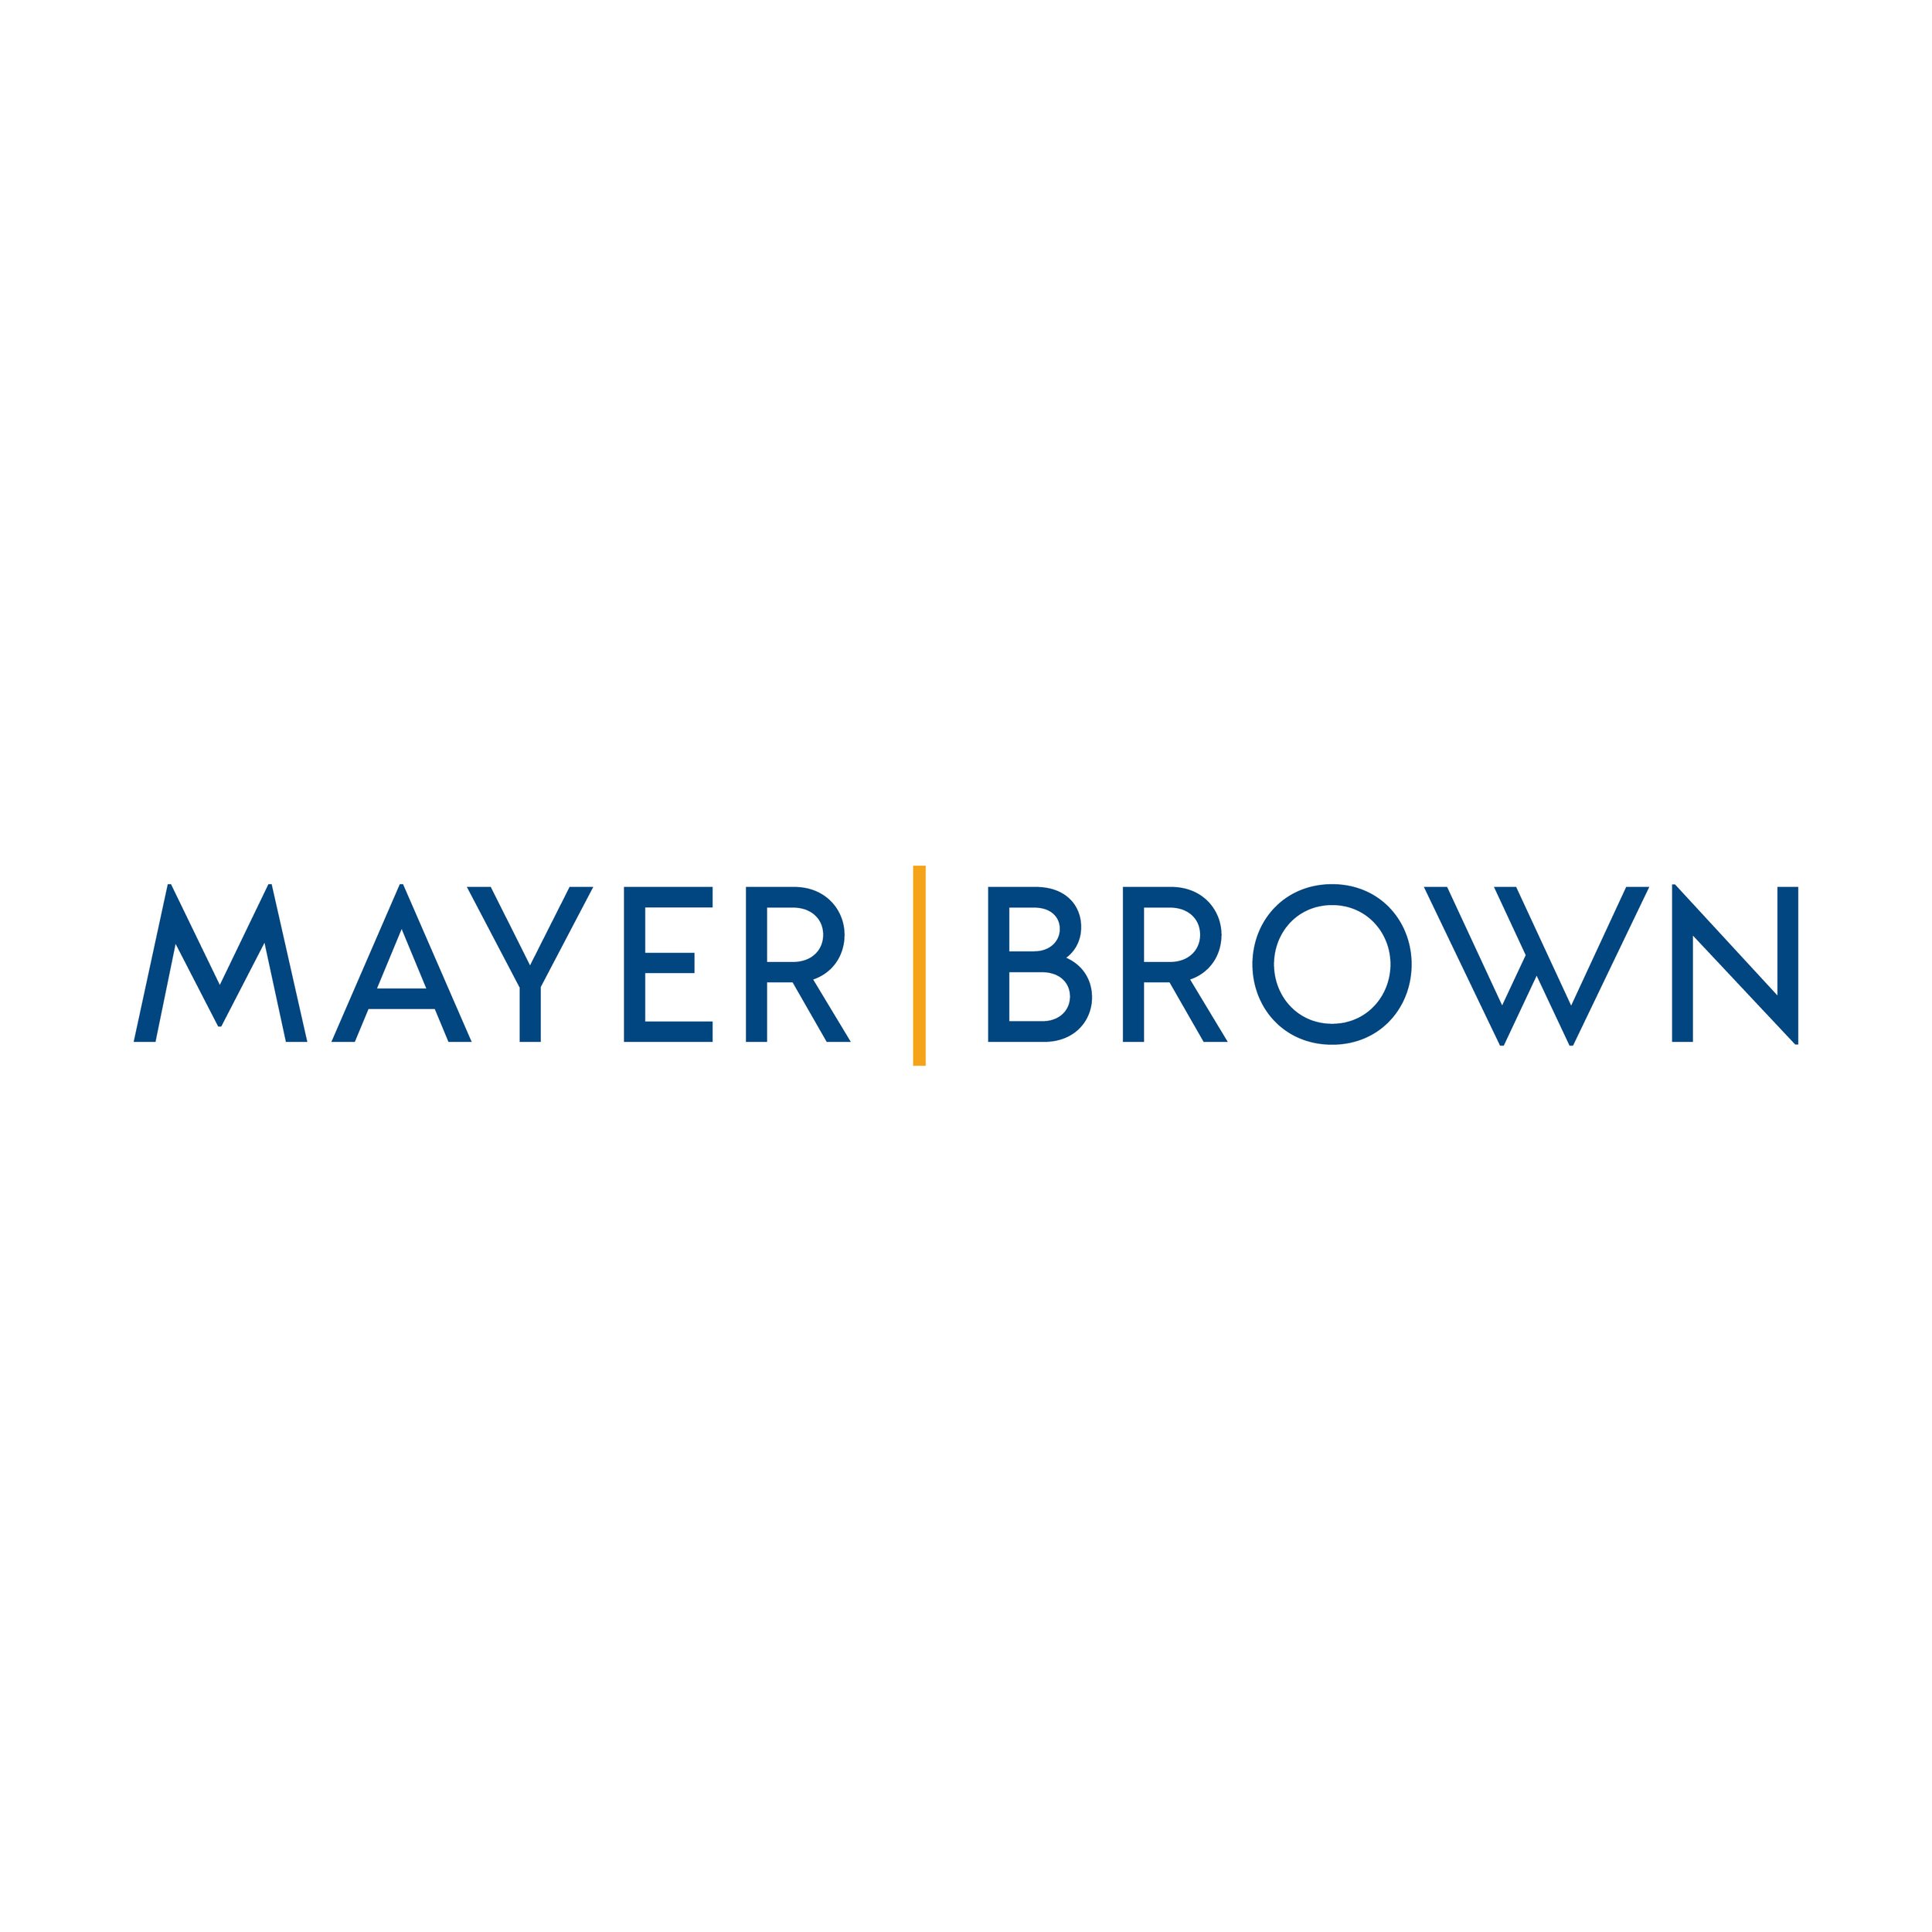 Mayer Brown.jpg